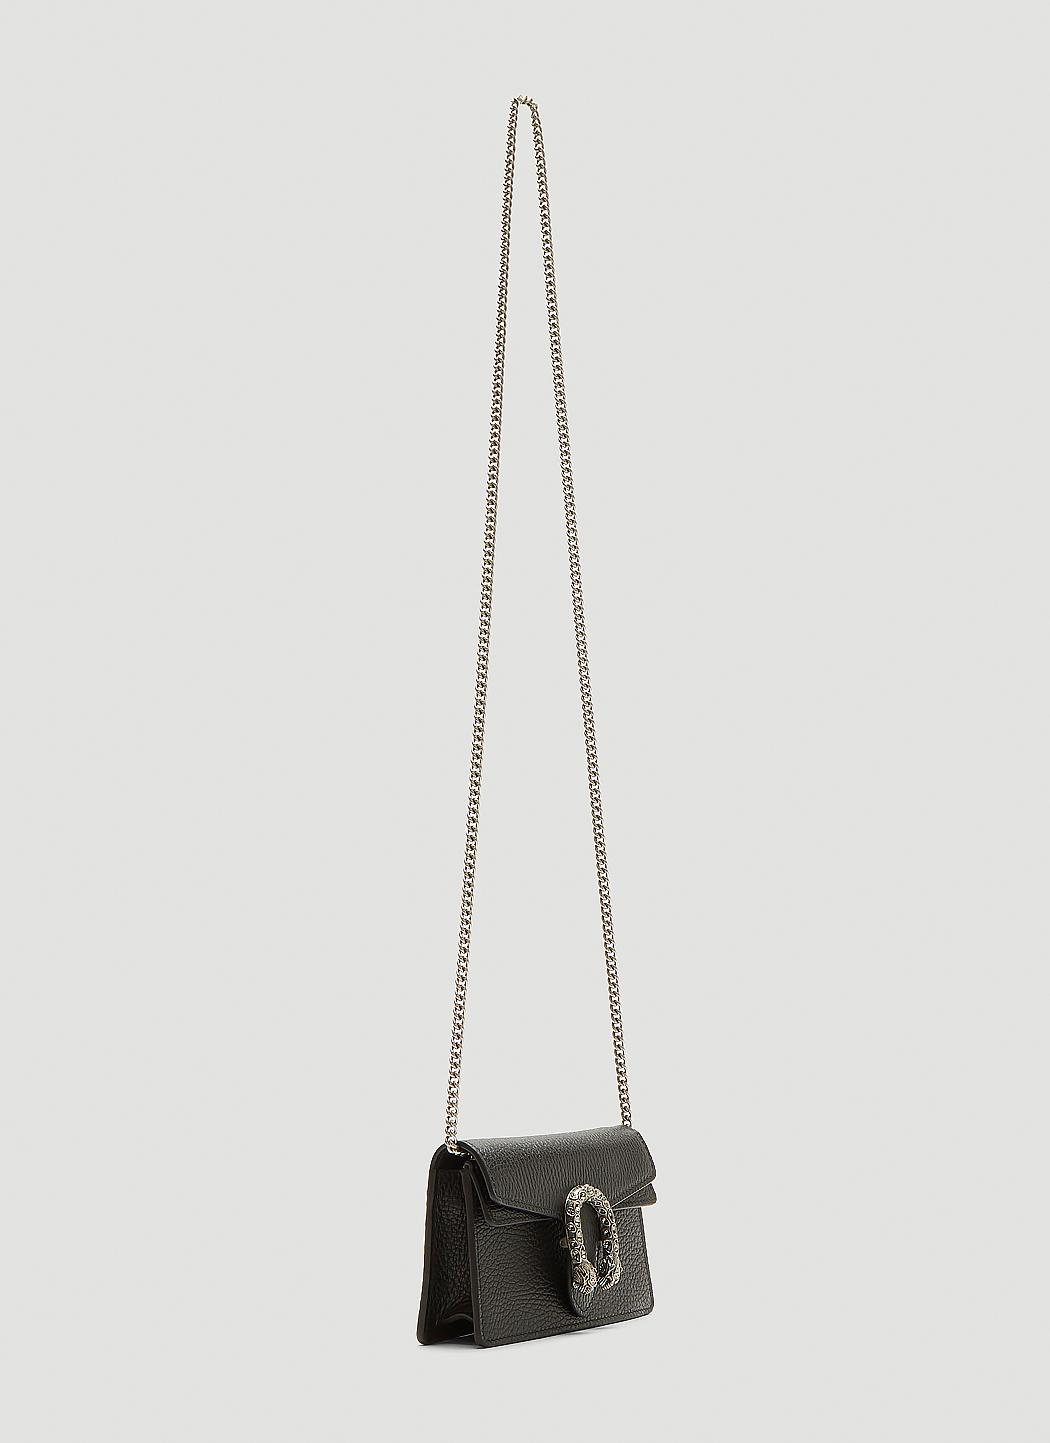 Black Leather Dionysus Super Mini Bag